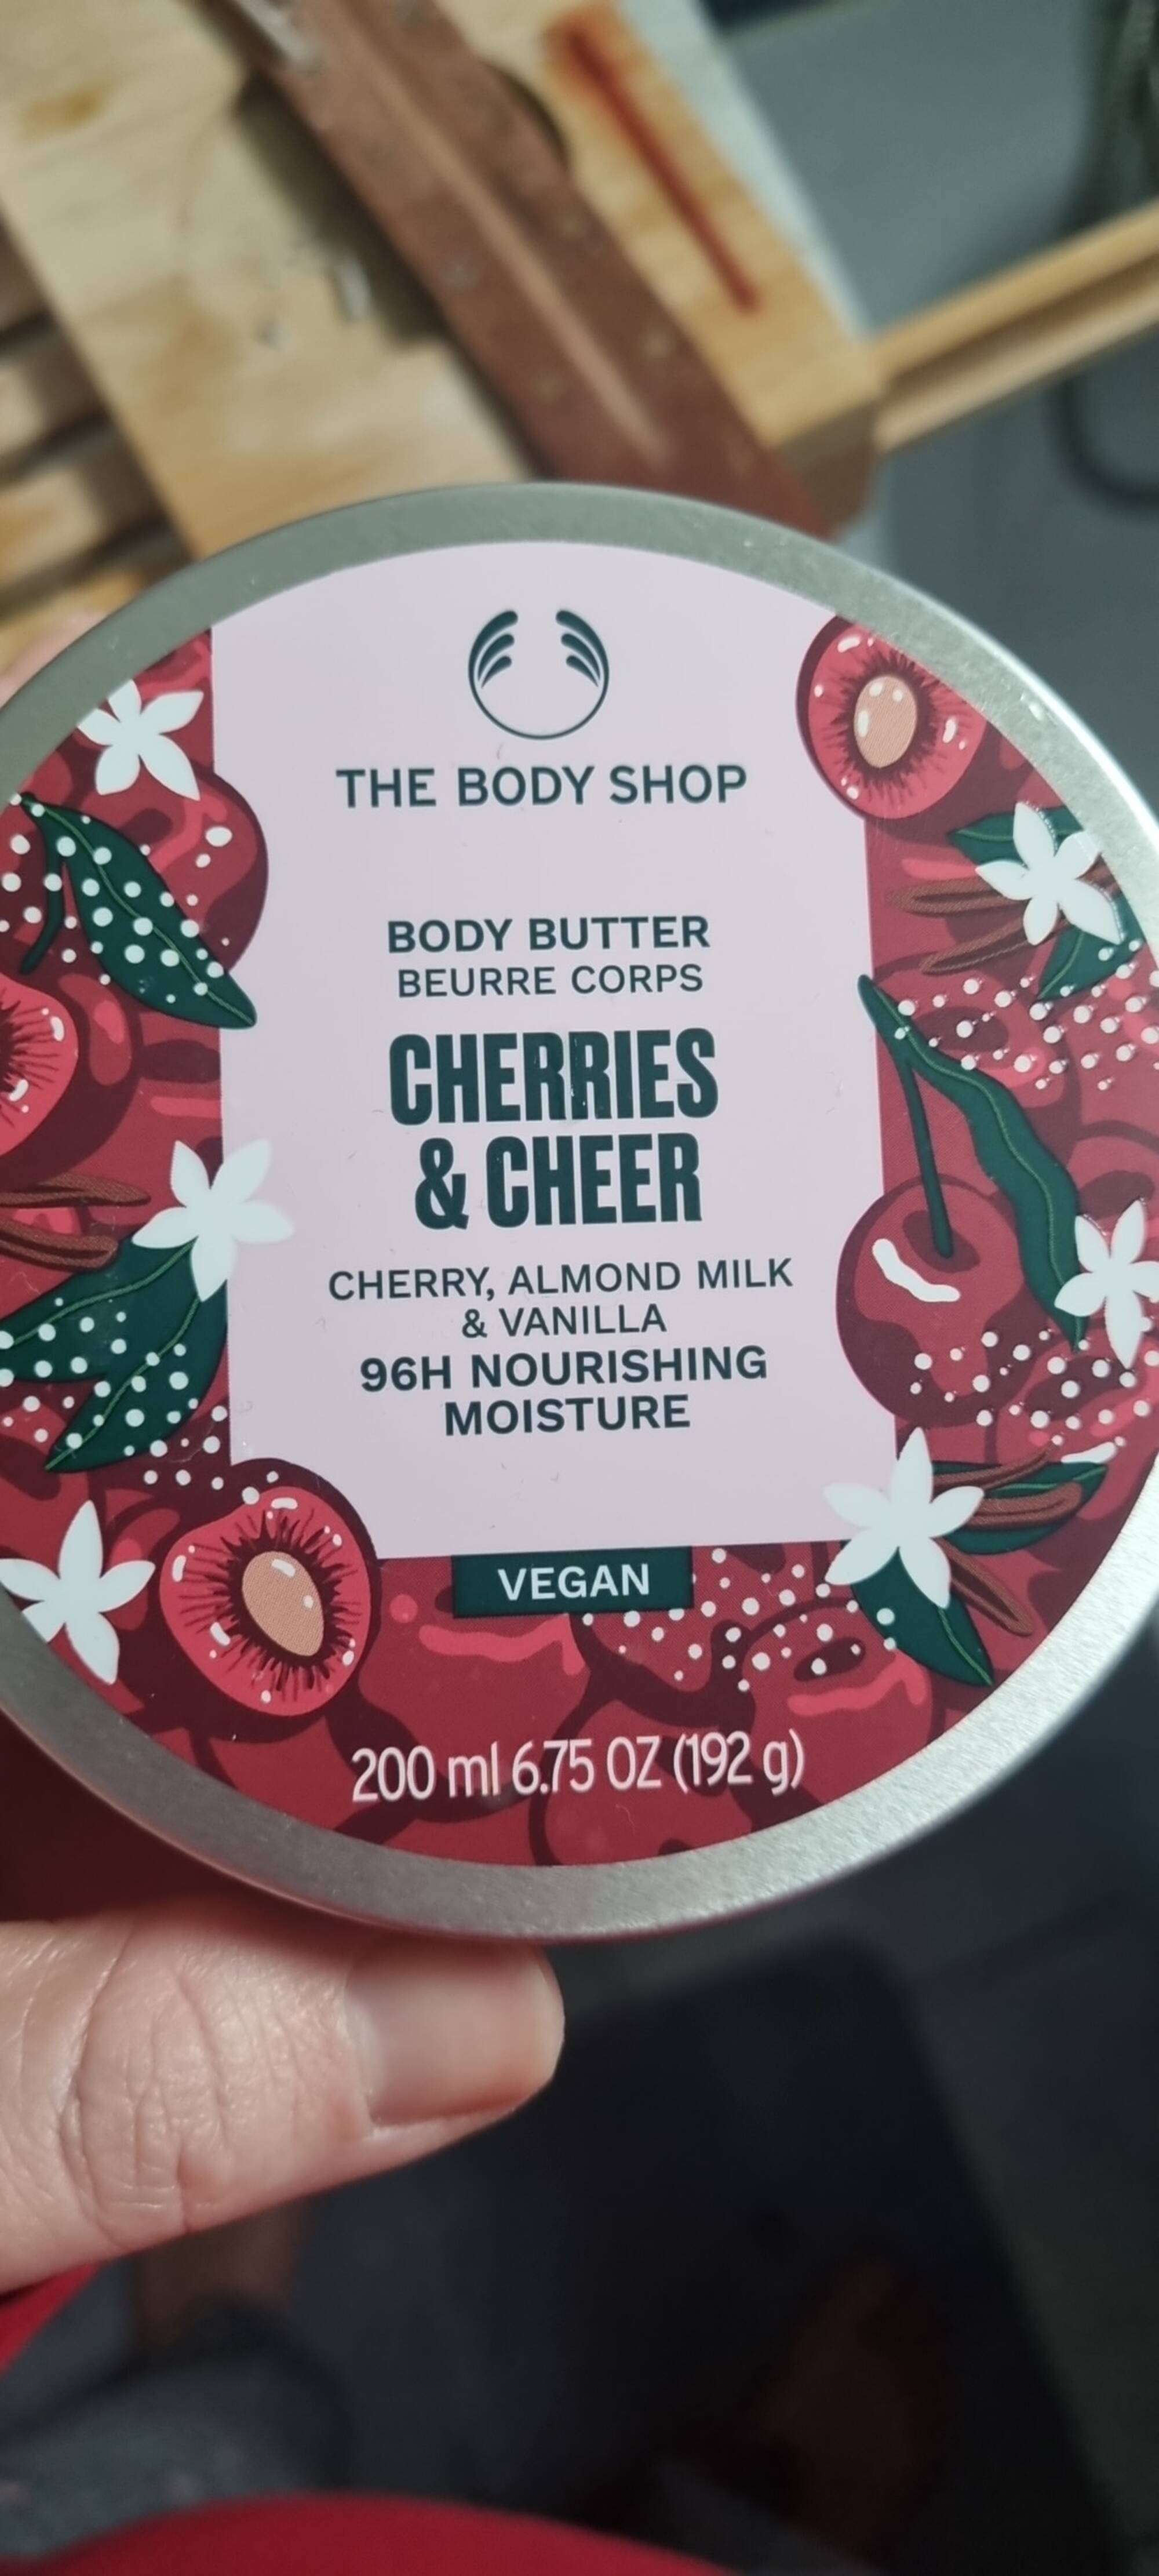 THE BODY SHOP - Cherries & cheer - Beurre corps